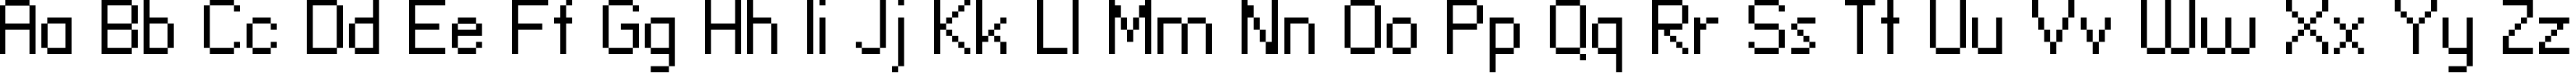 Пример написания английского алфавита шрифтом standard 09_55